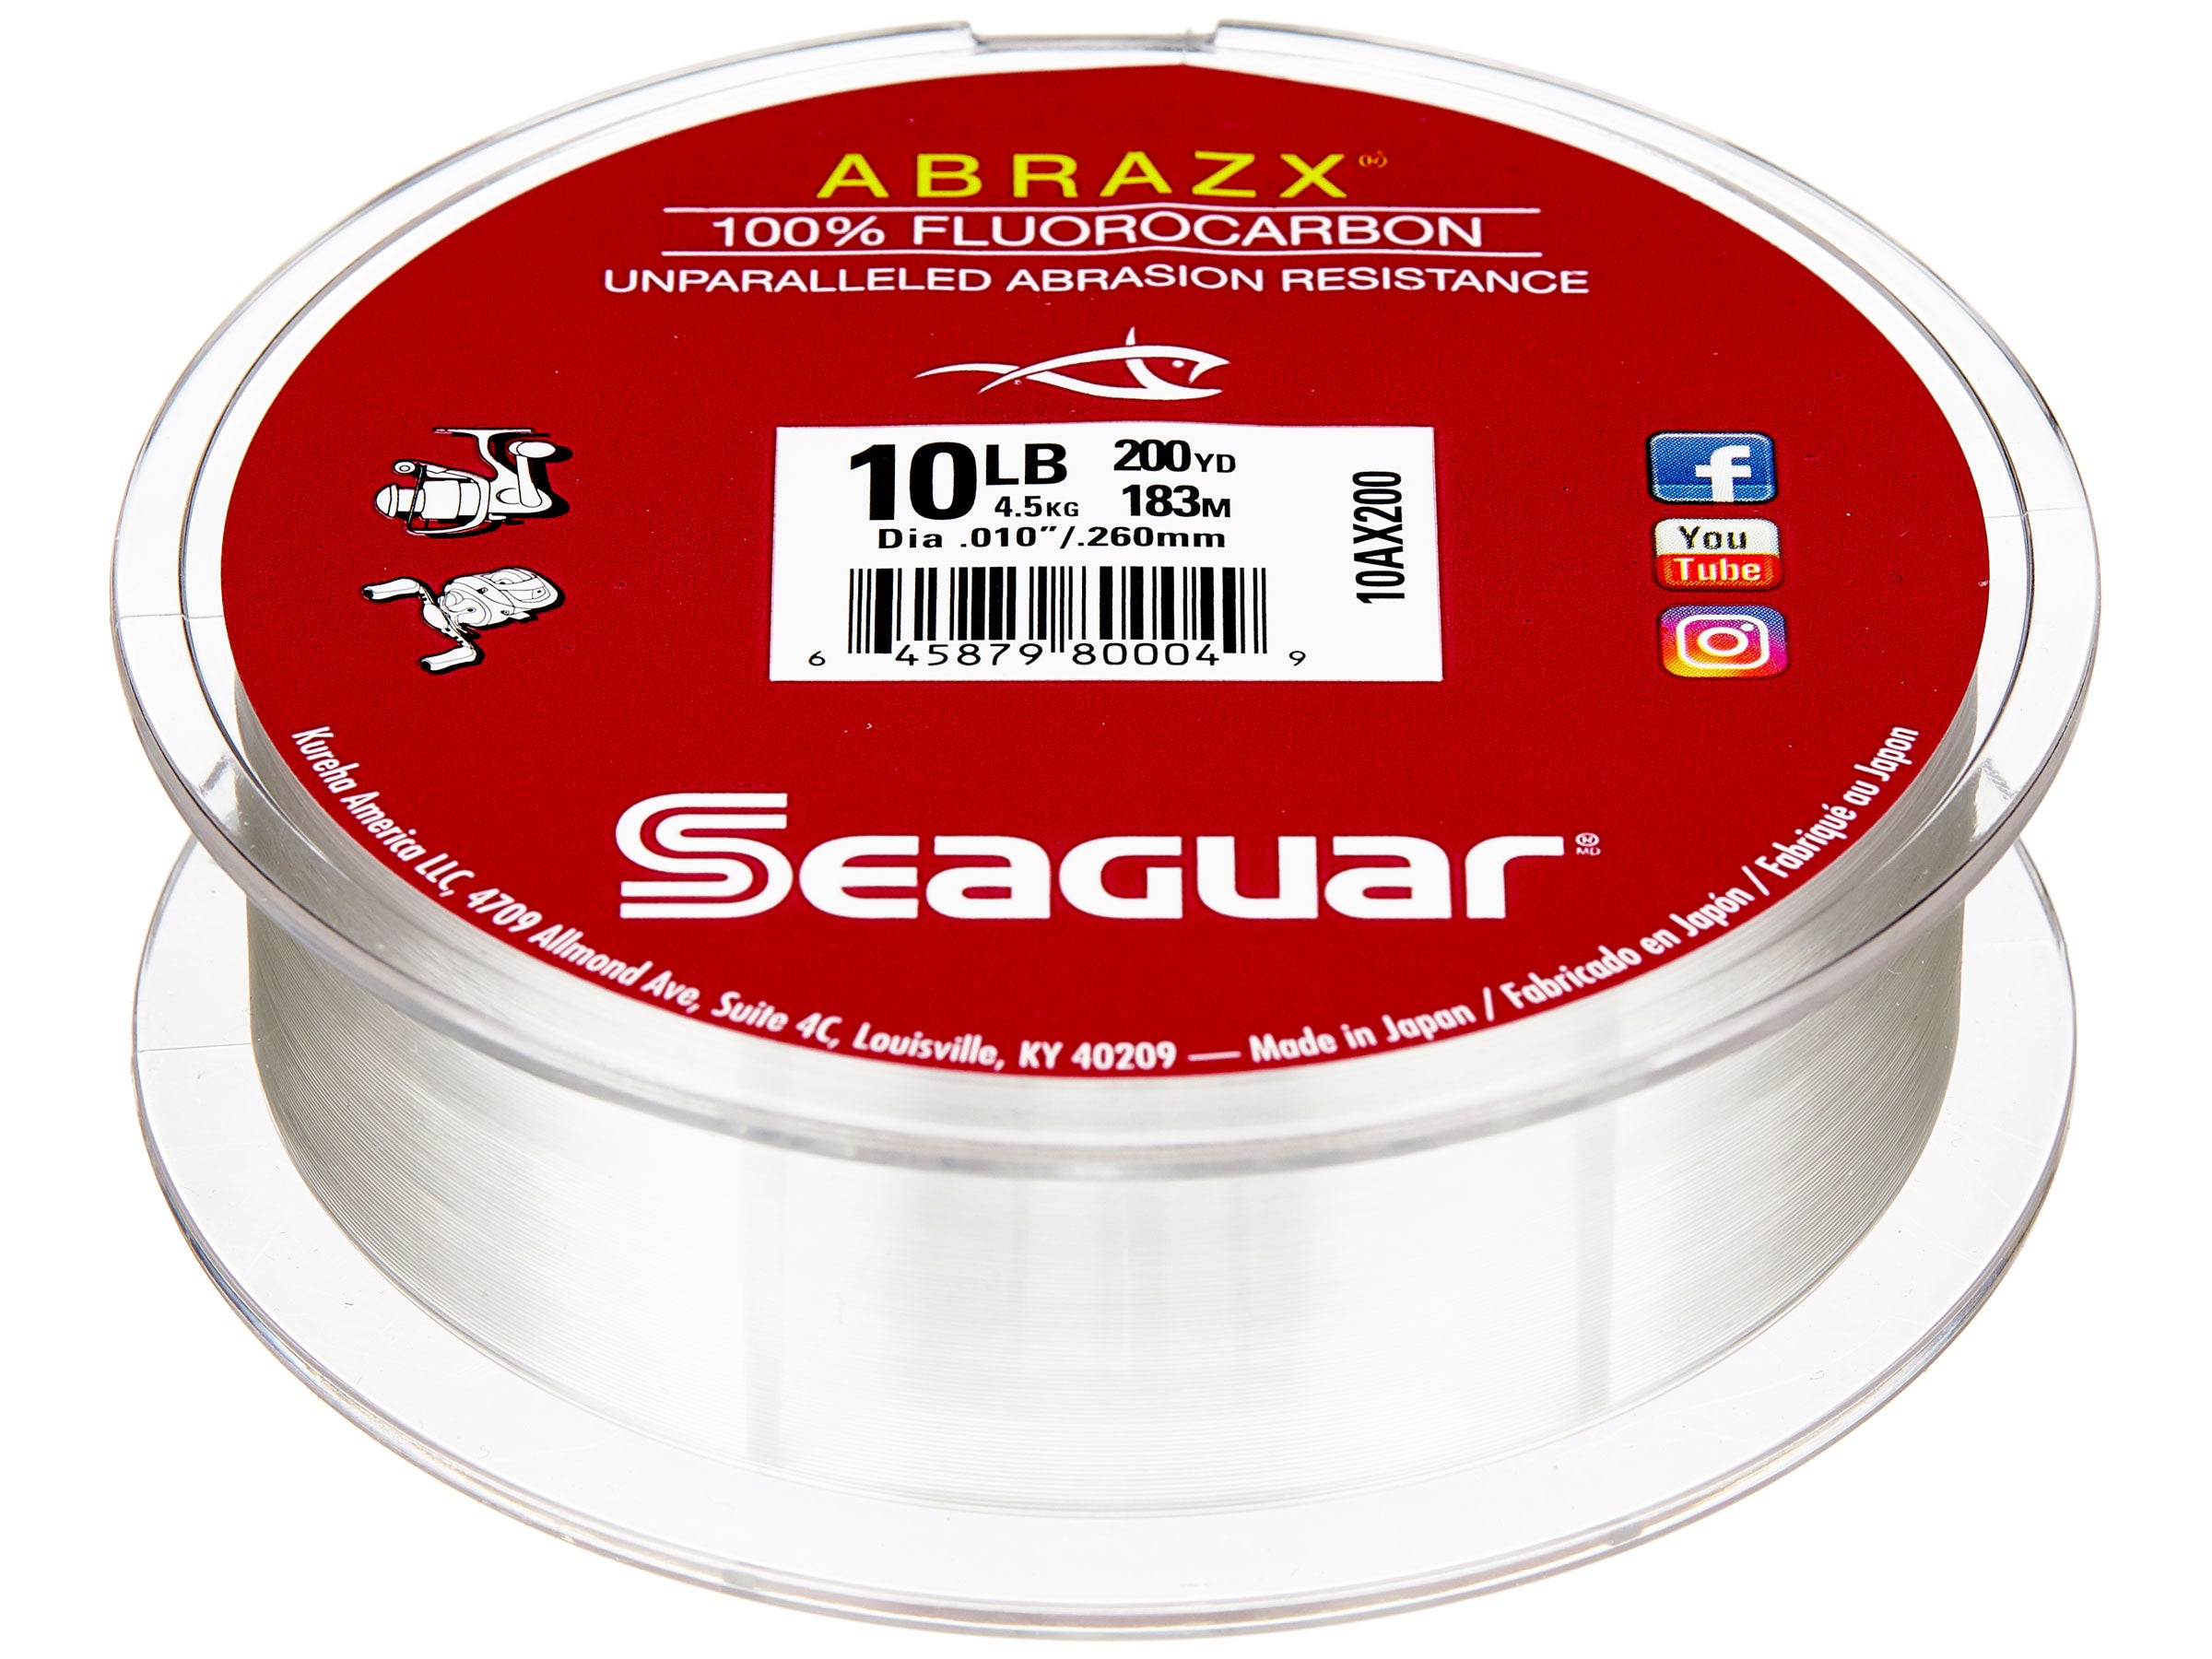 10AX1000 Seaguar Abrazx 1 Fluoro Fishing Line 1000 yd 10 lb 